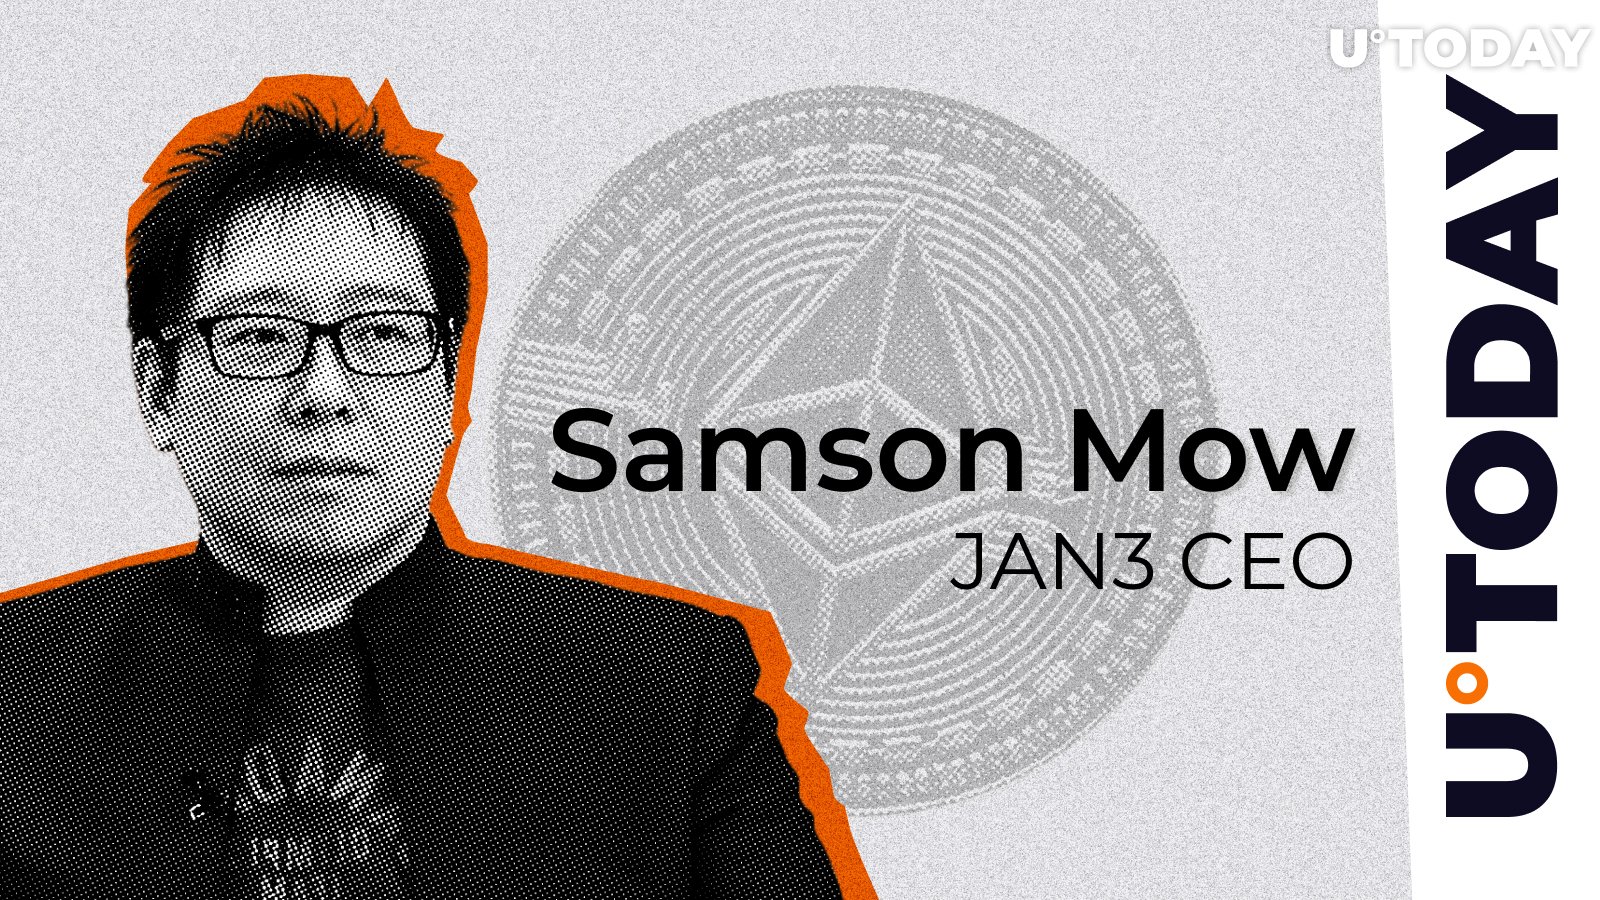 Samson Mow Slams ETH Ahead of Ethereum ETF Launch